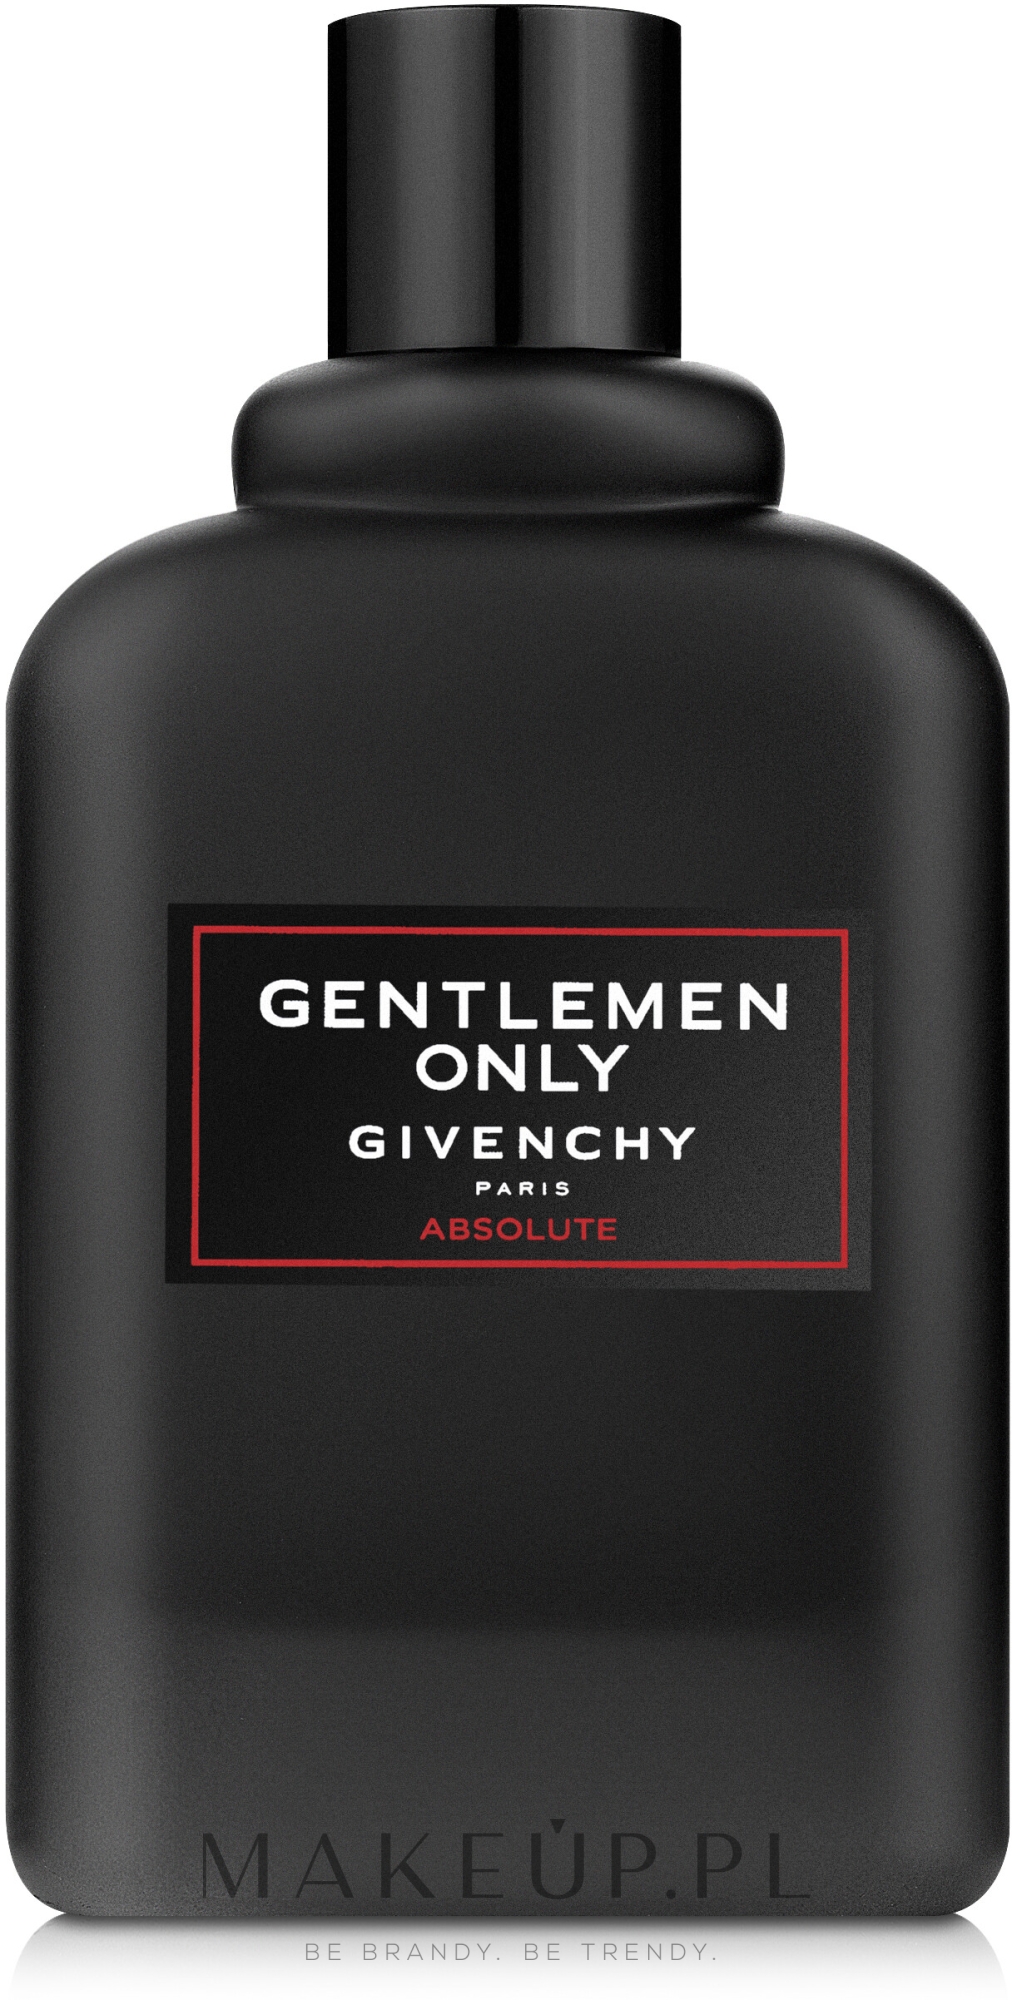 Givenchy Gentlemen Only Absolute Woda Perfumowana Makeup Pl